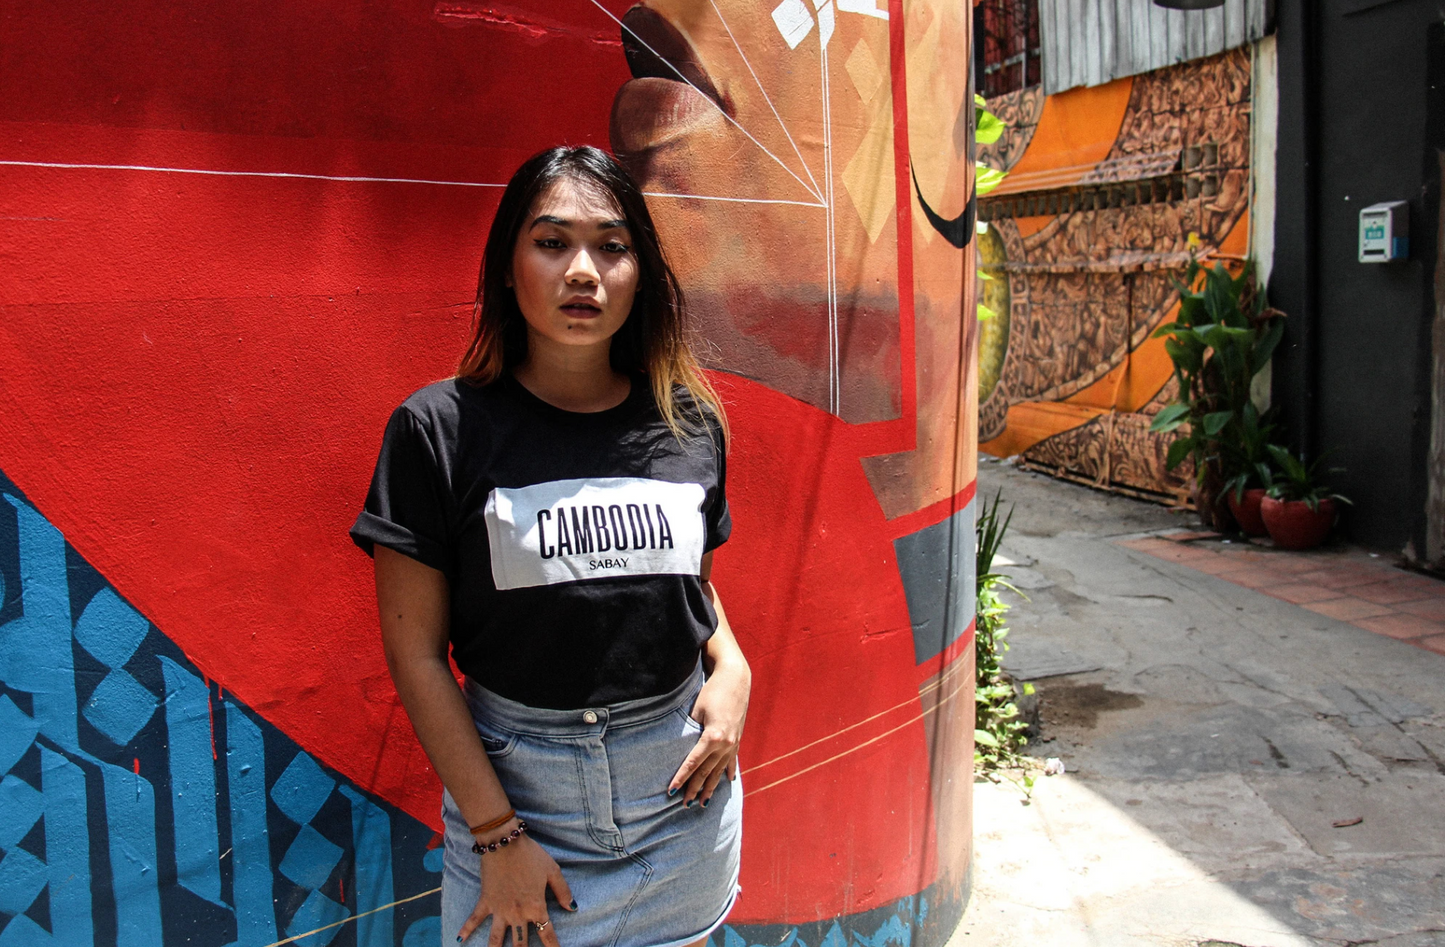 T-shirt Cambodia Black par Sabay Creation